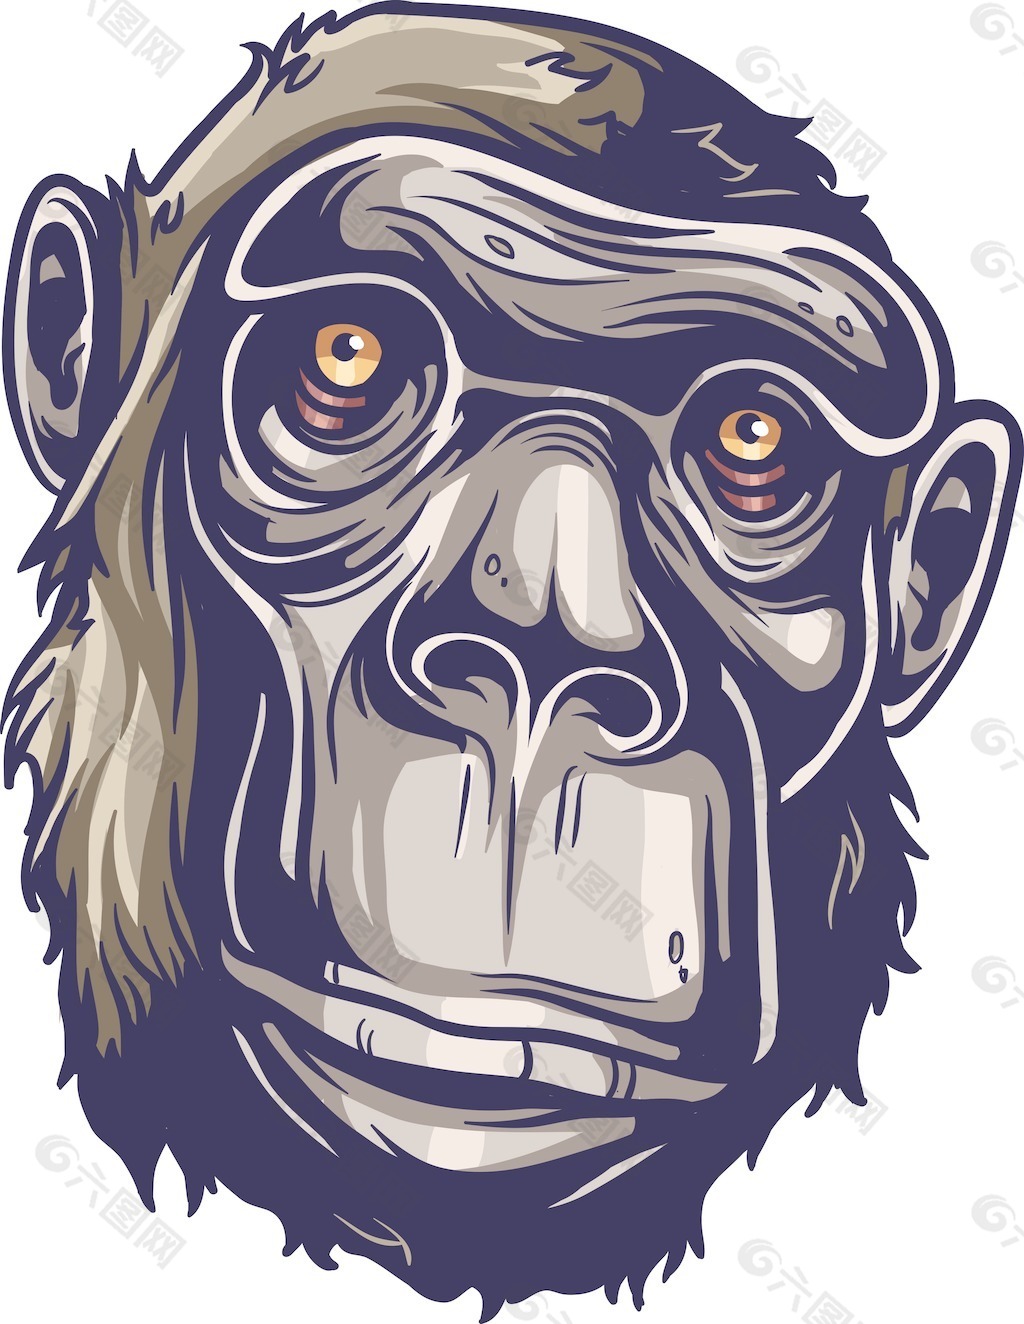 ArtStation - Chimpanzee